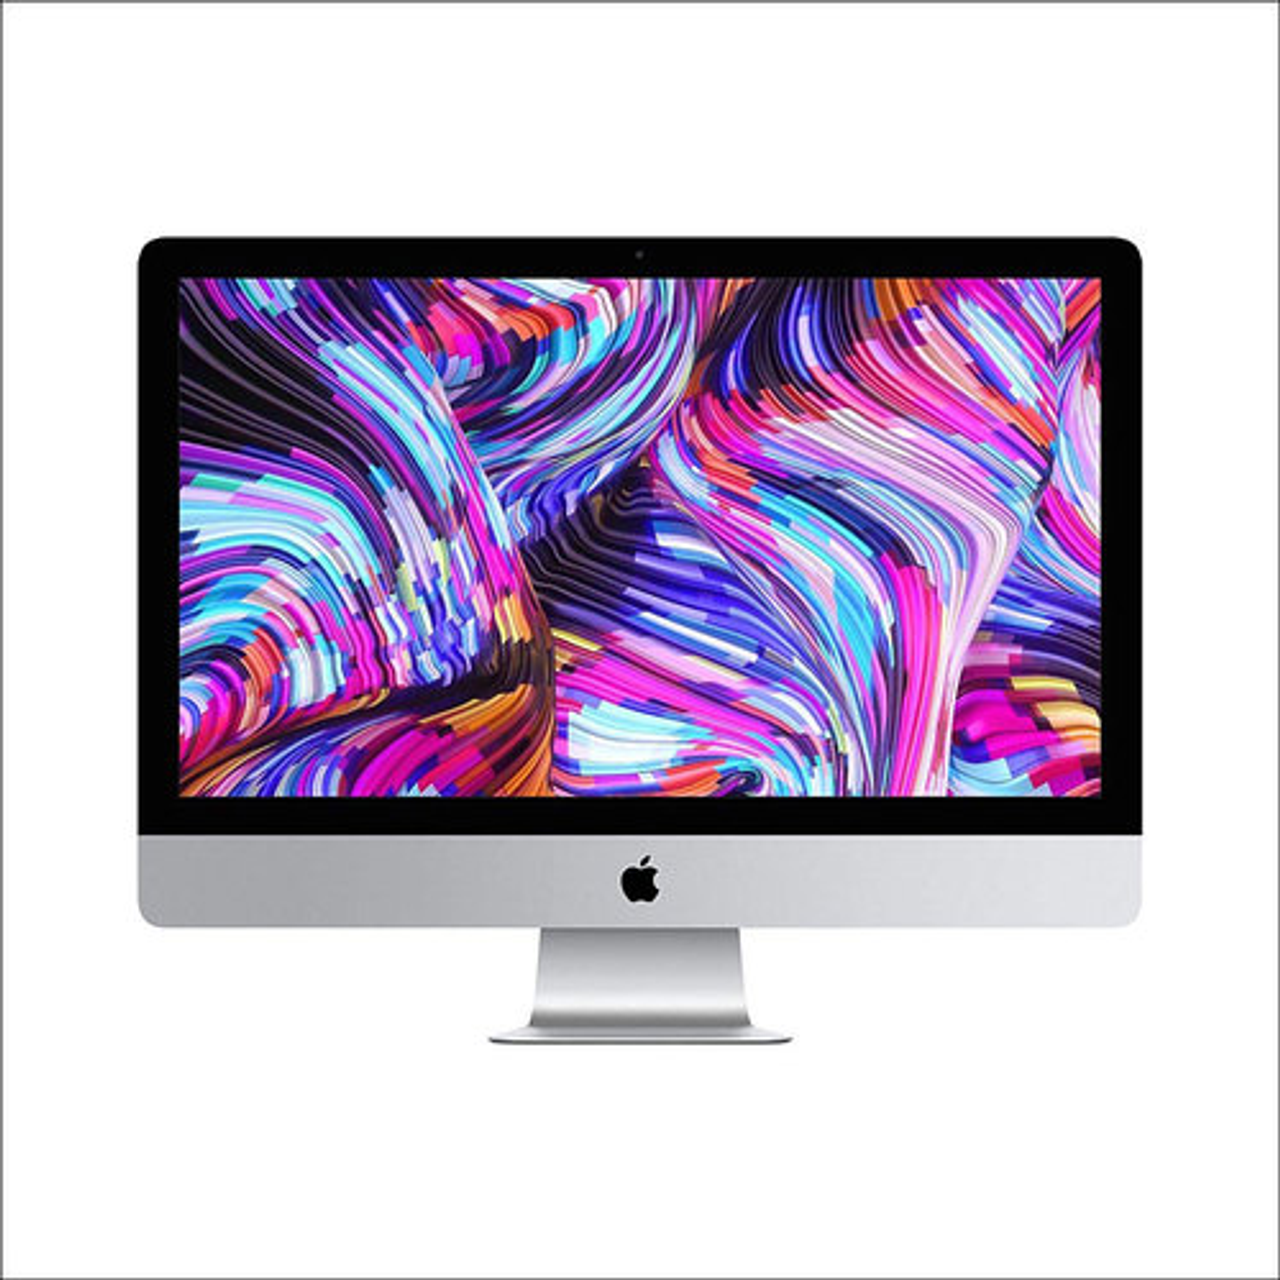 Pre-Owned - Apple iMac 27" (Retina 5K Display, Late 2015) - Desktop "Core i5" 3.2 - 16GB Memory - 1TB HDD - Silver